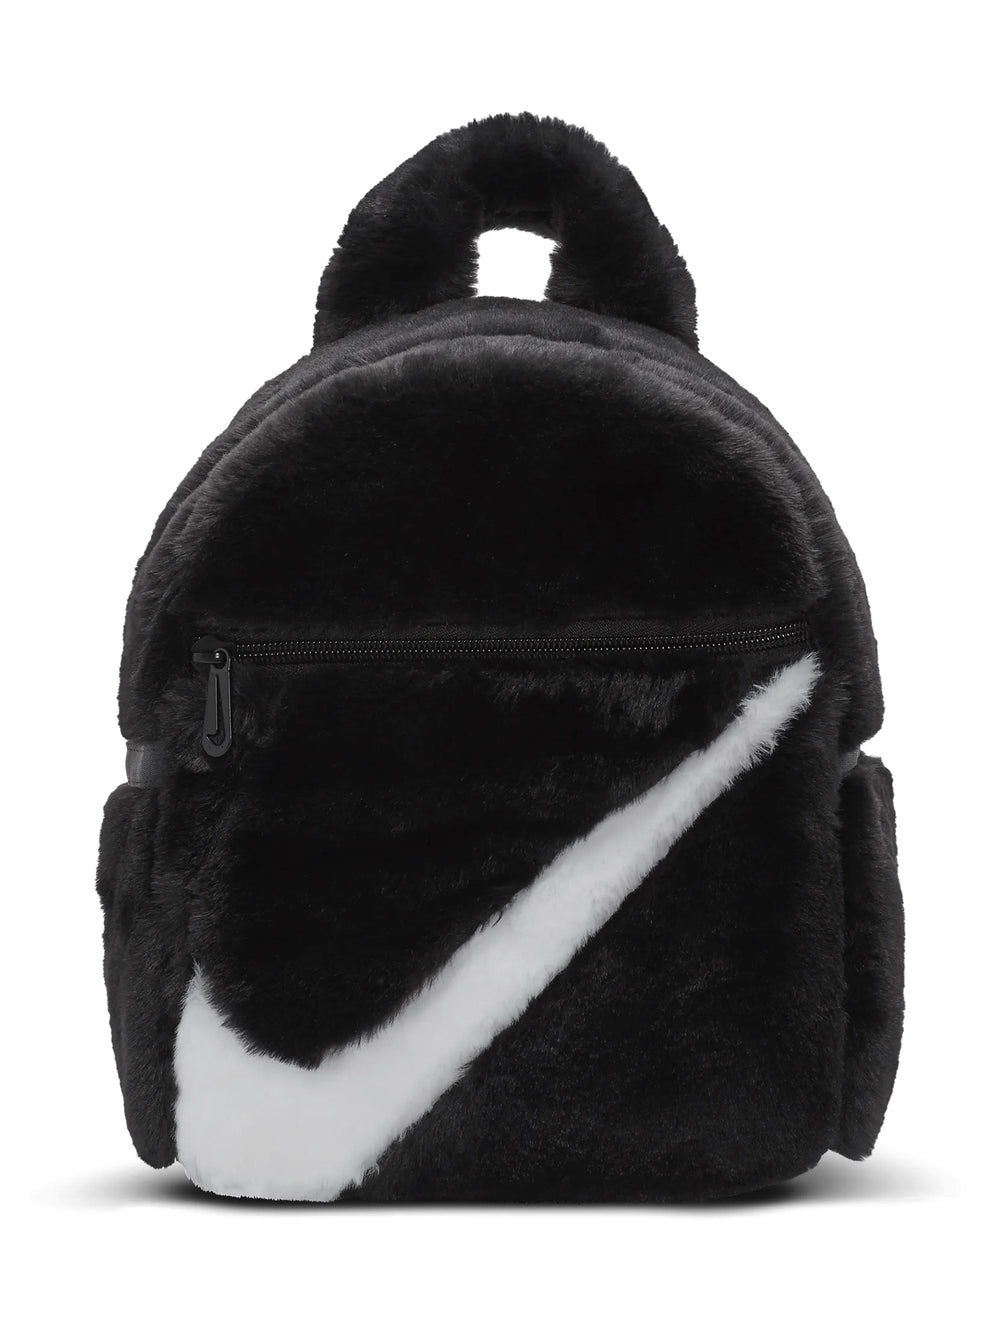 Nike Sportswear Futura 365 Faux Fur Crossbody Bag (1L).